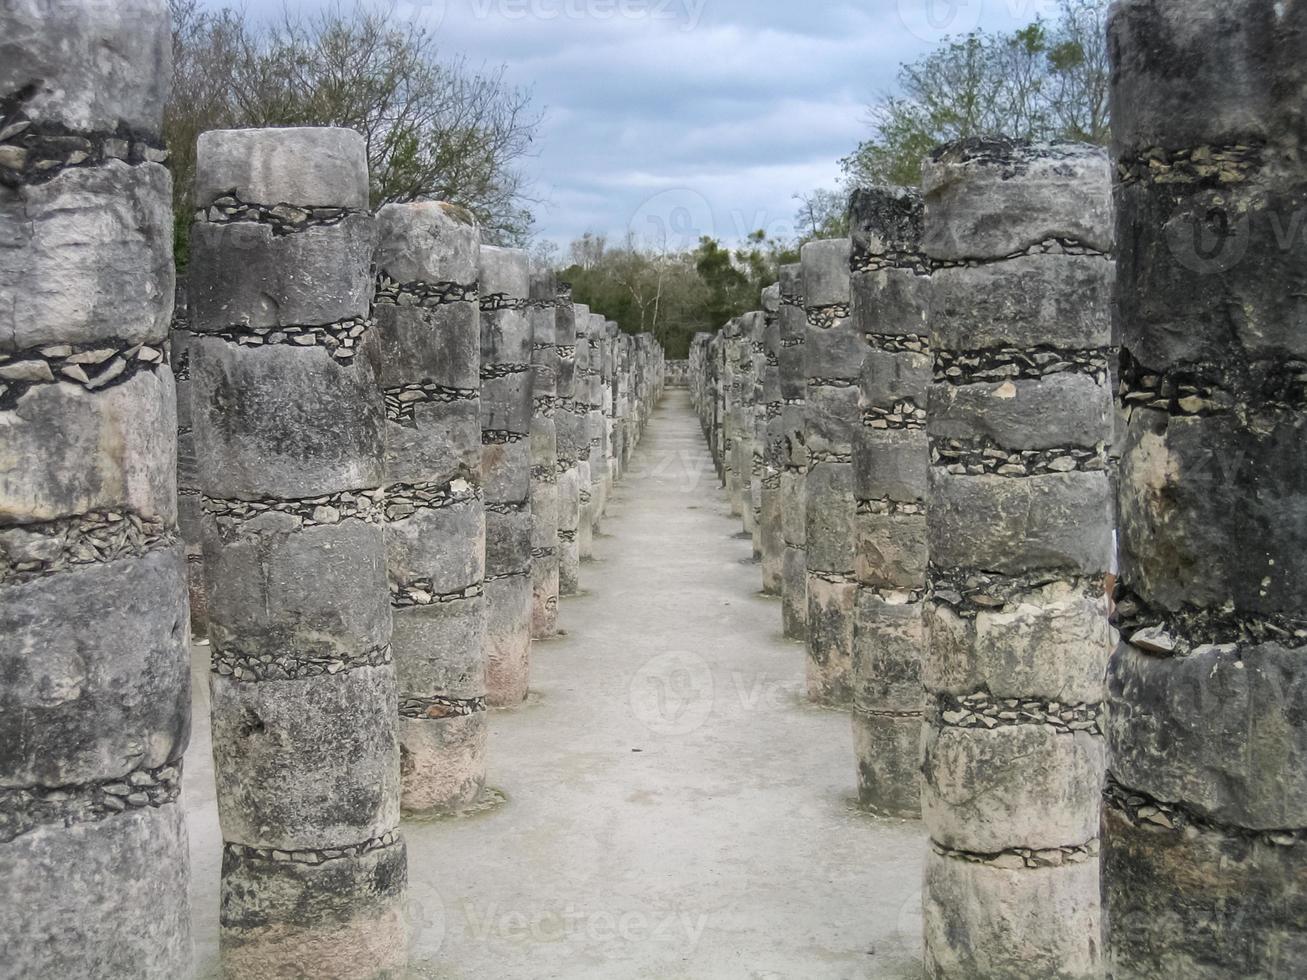 antigas ruínas maias de chichen itza no yucatan do méxico. foto